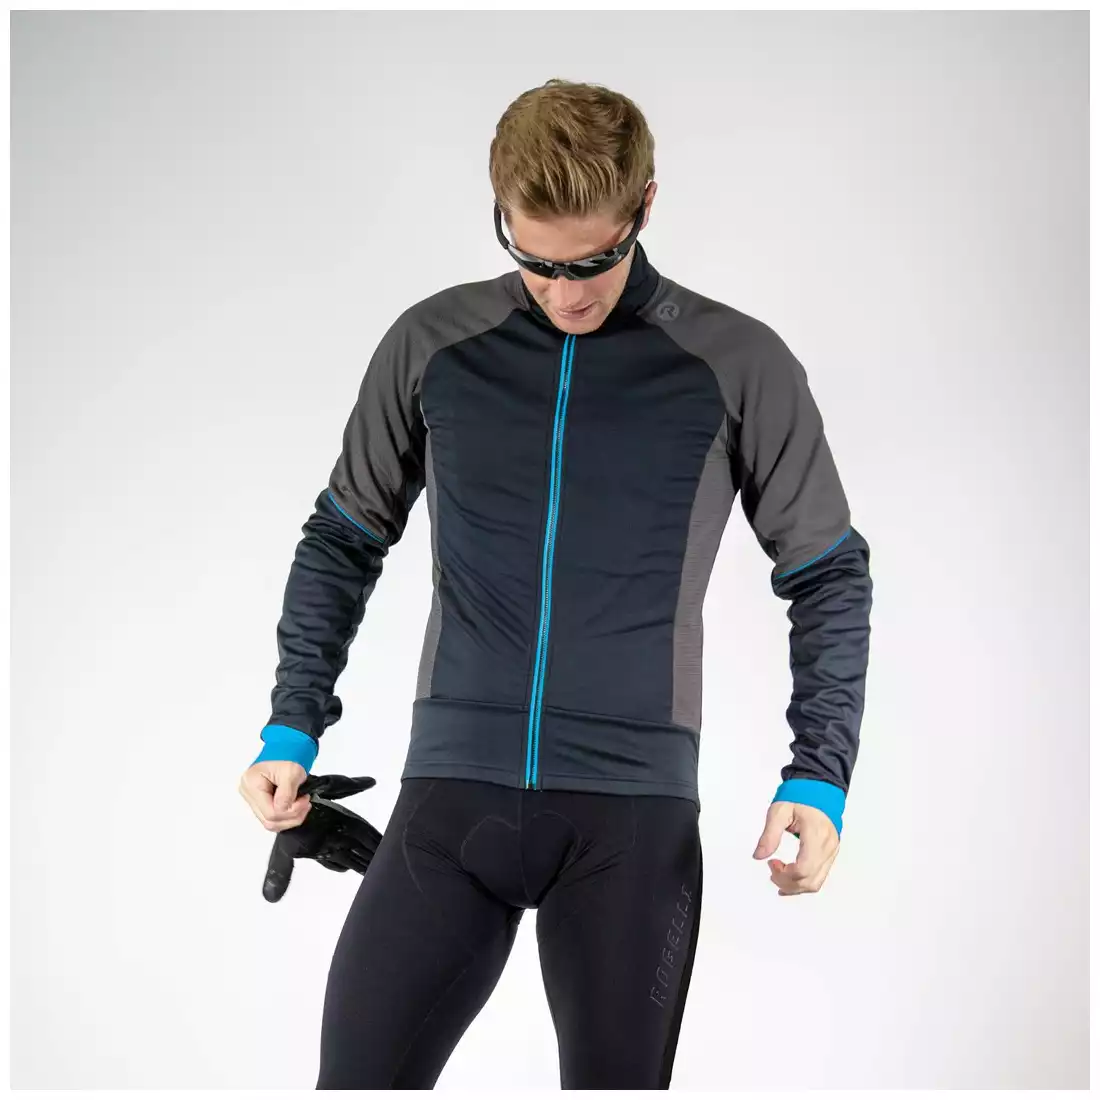 ROGELLI zimná cyklistická bunda softshellová TRANI 4.0, čierno-šedo-modrá